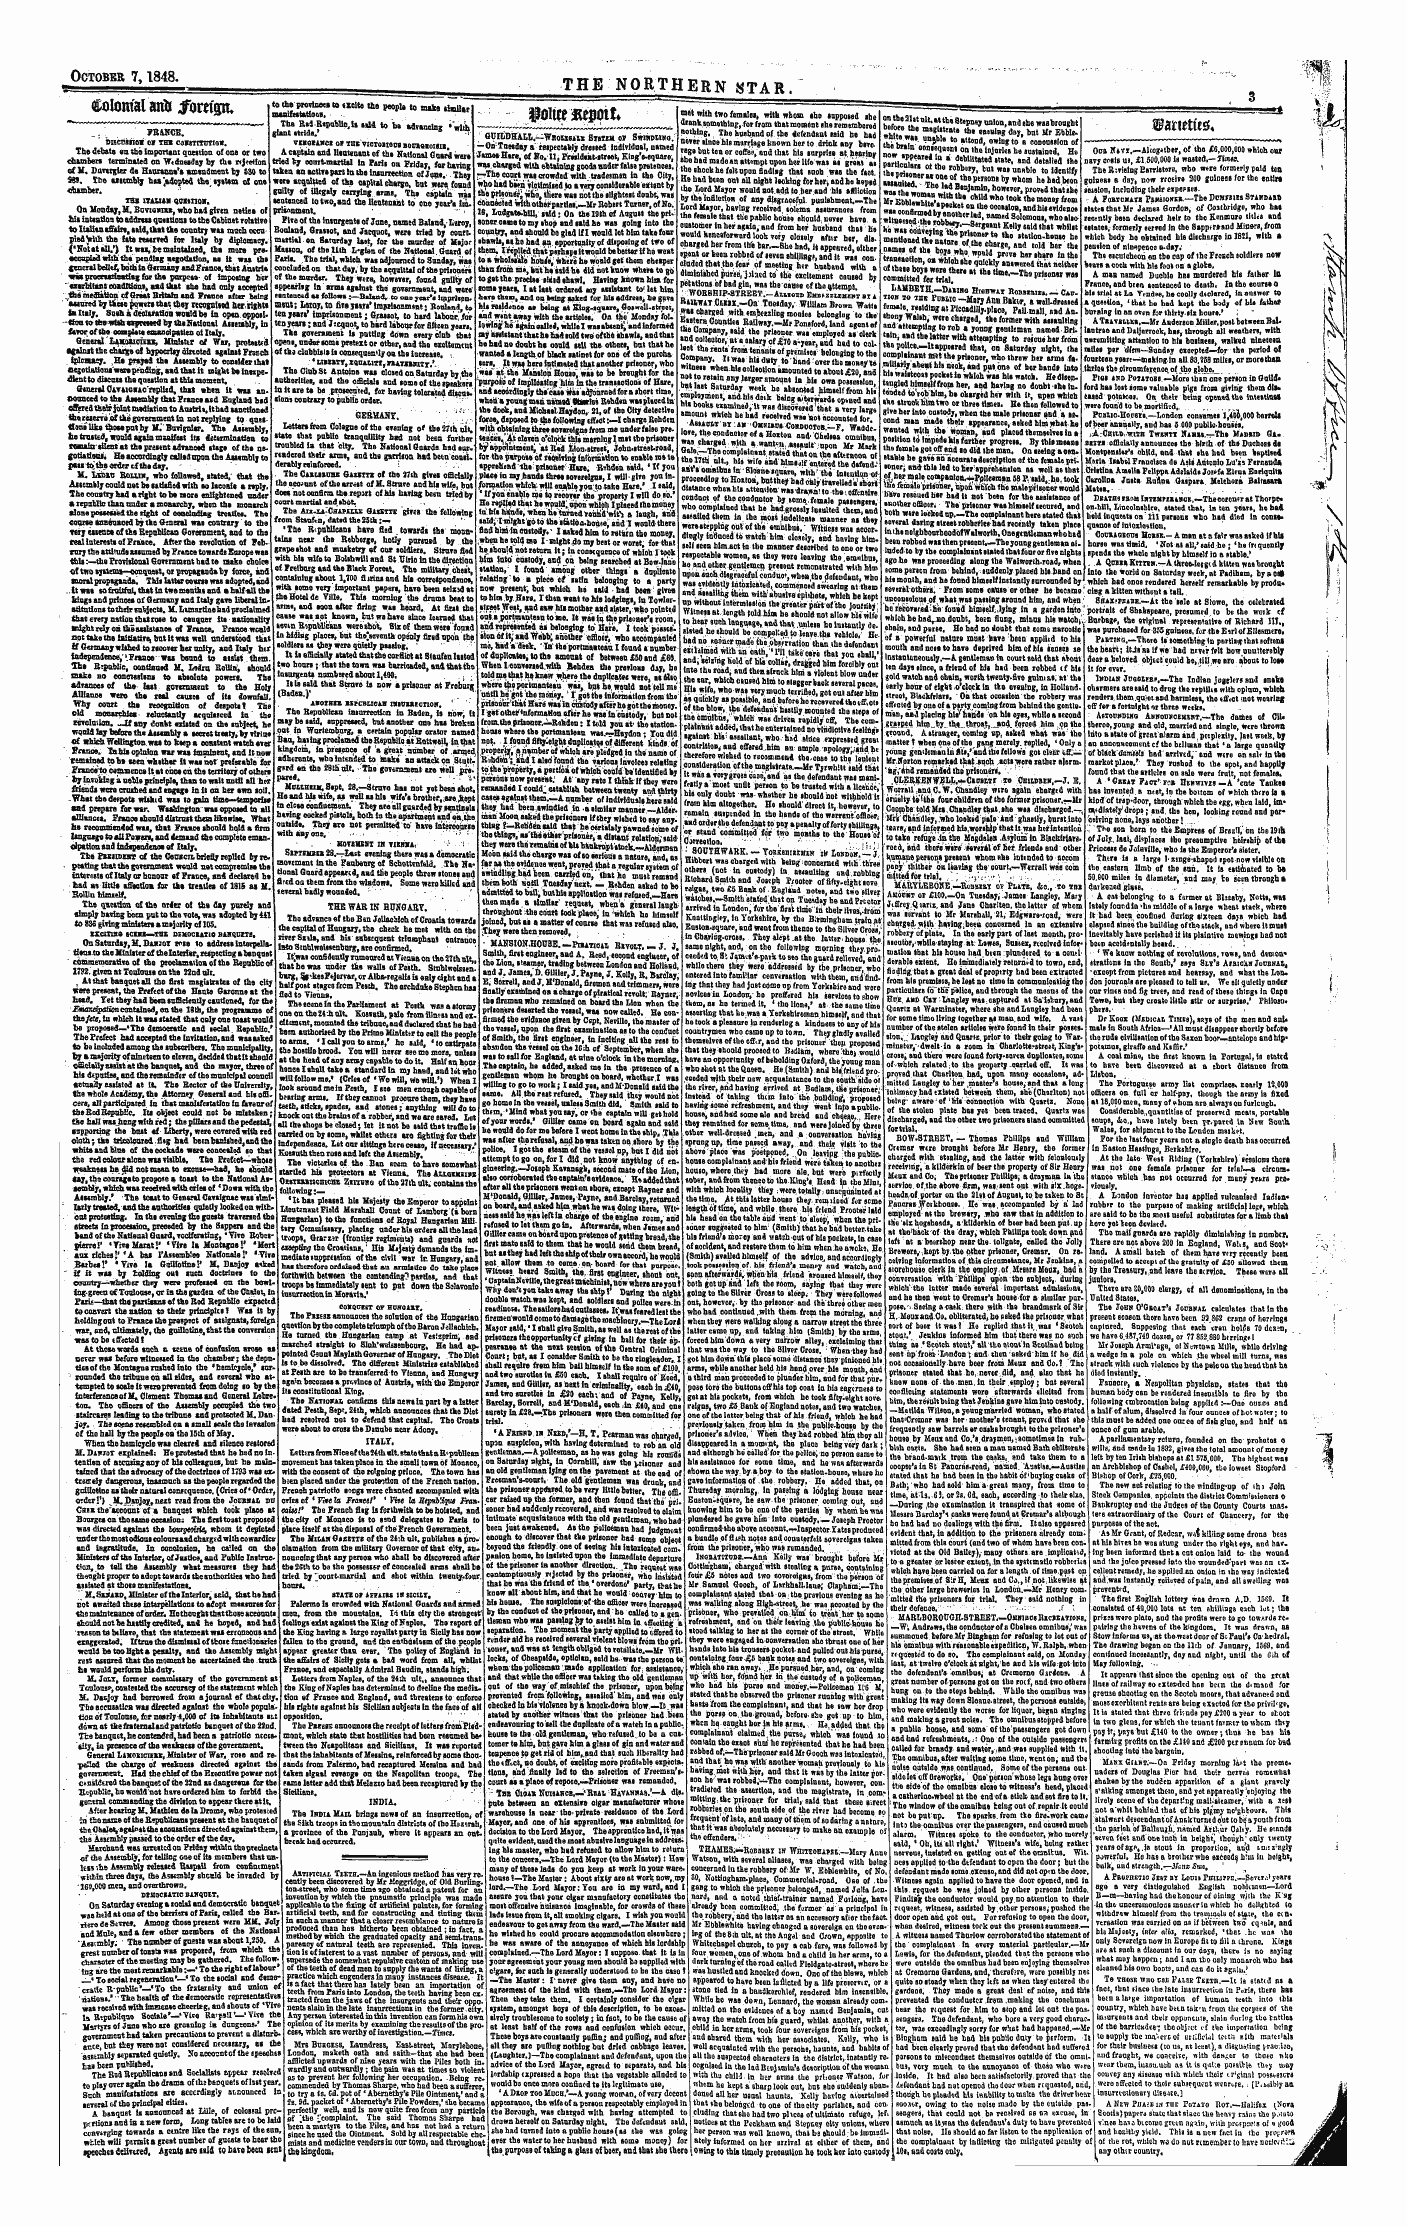 Northern Star (1837-1852): jS F Y, 1st edition - Dpiftr Fuptf?